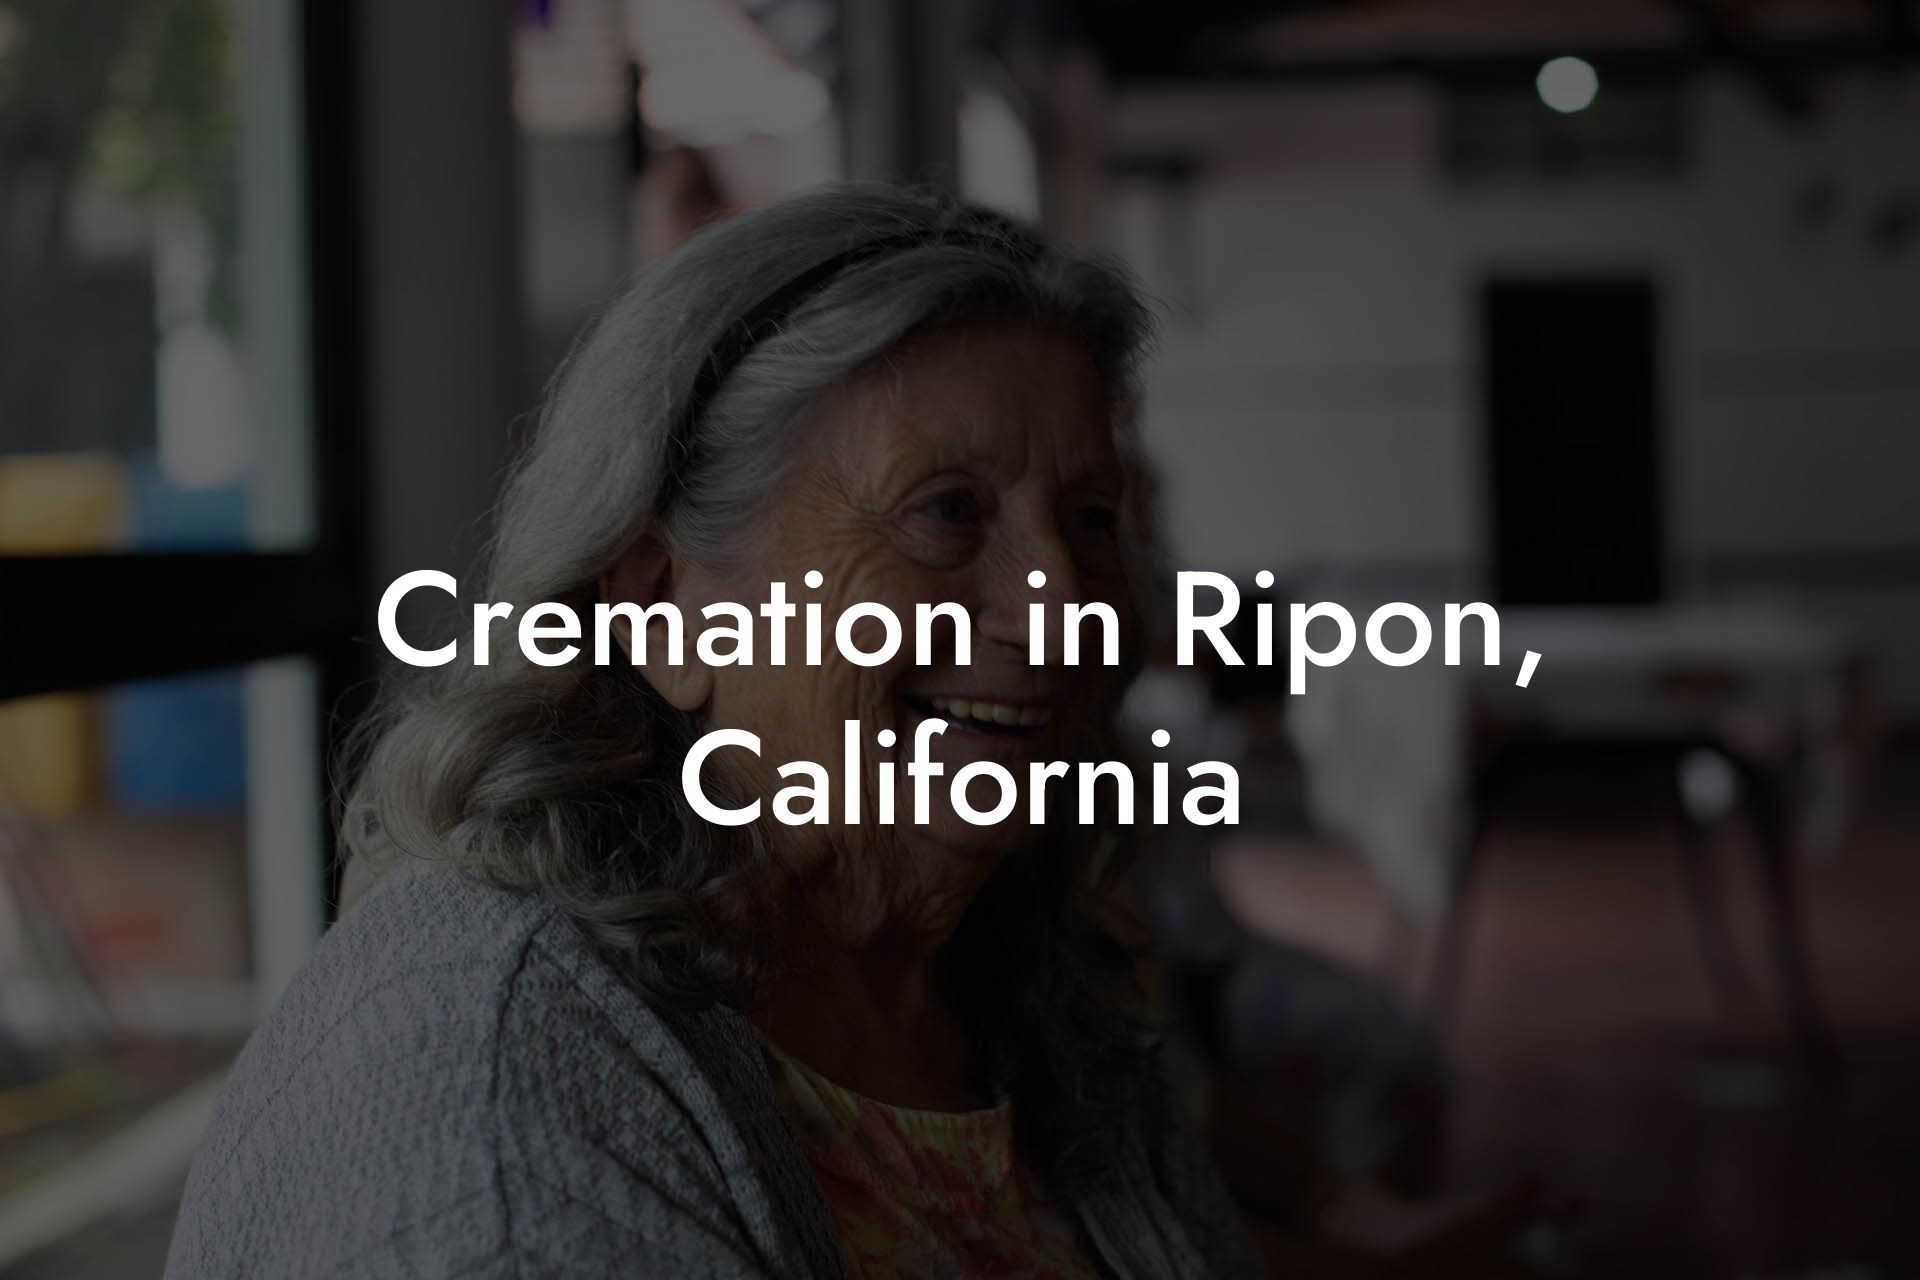 Cremation in Ripon, California